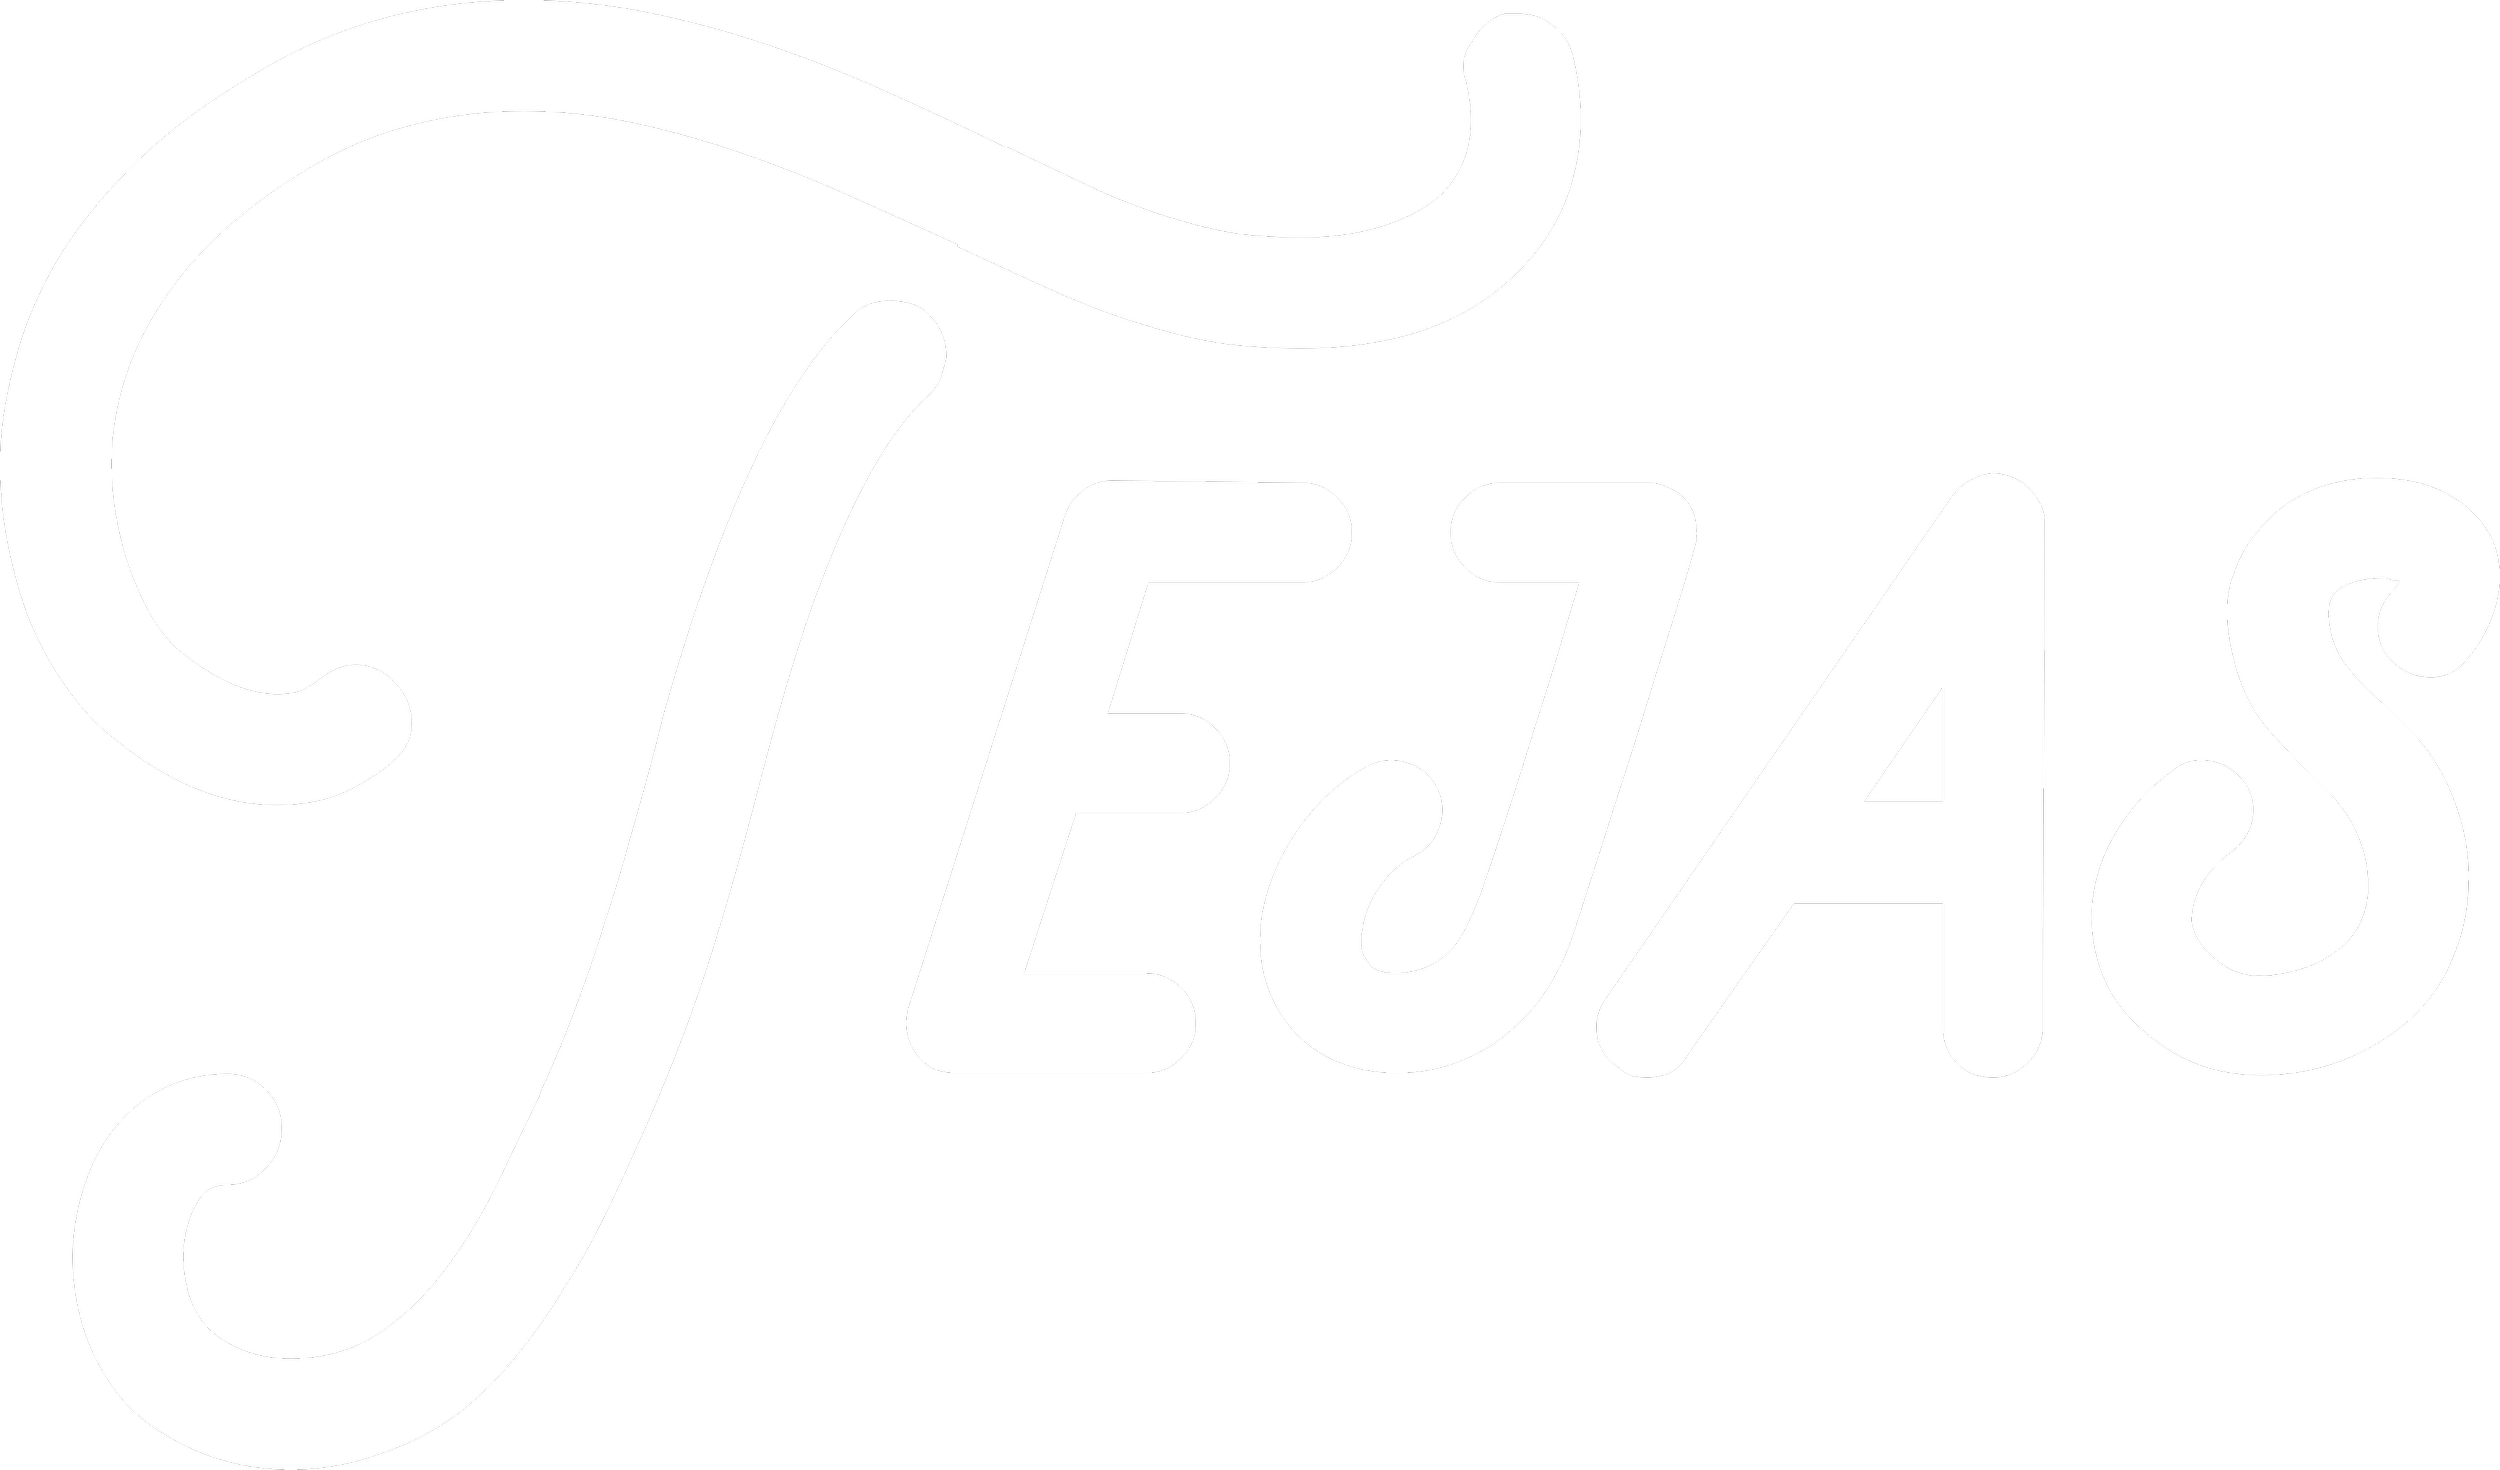 Share more than 131 tejas logo super hot - camera.edu.vn